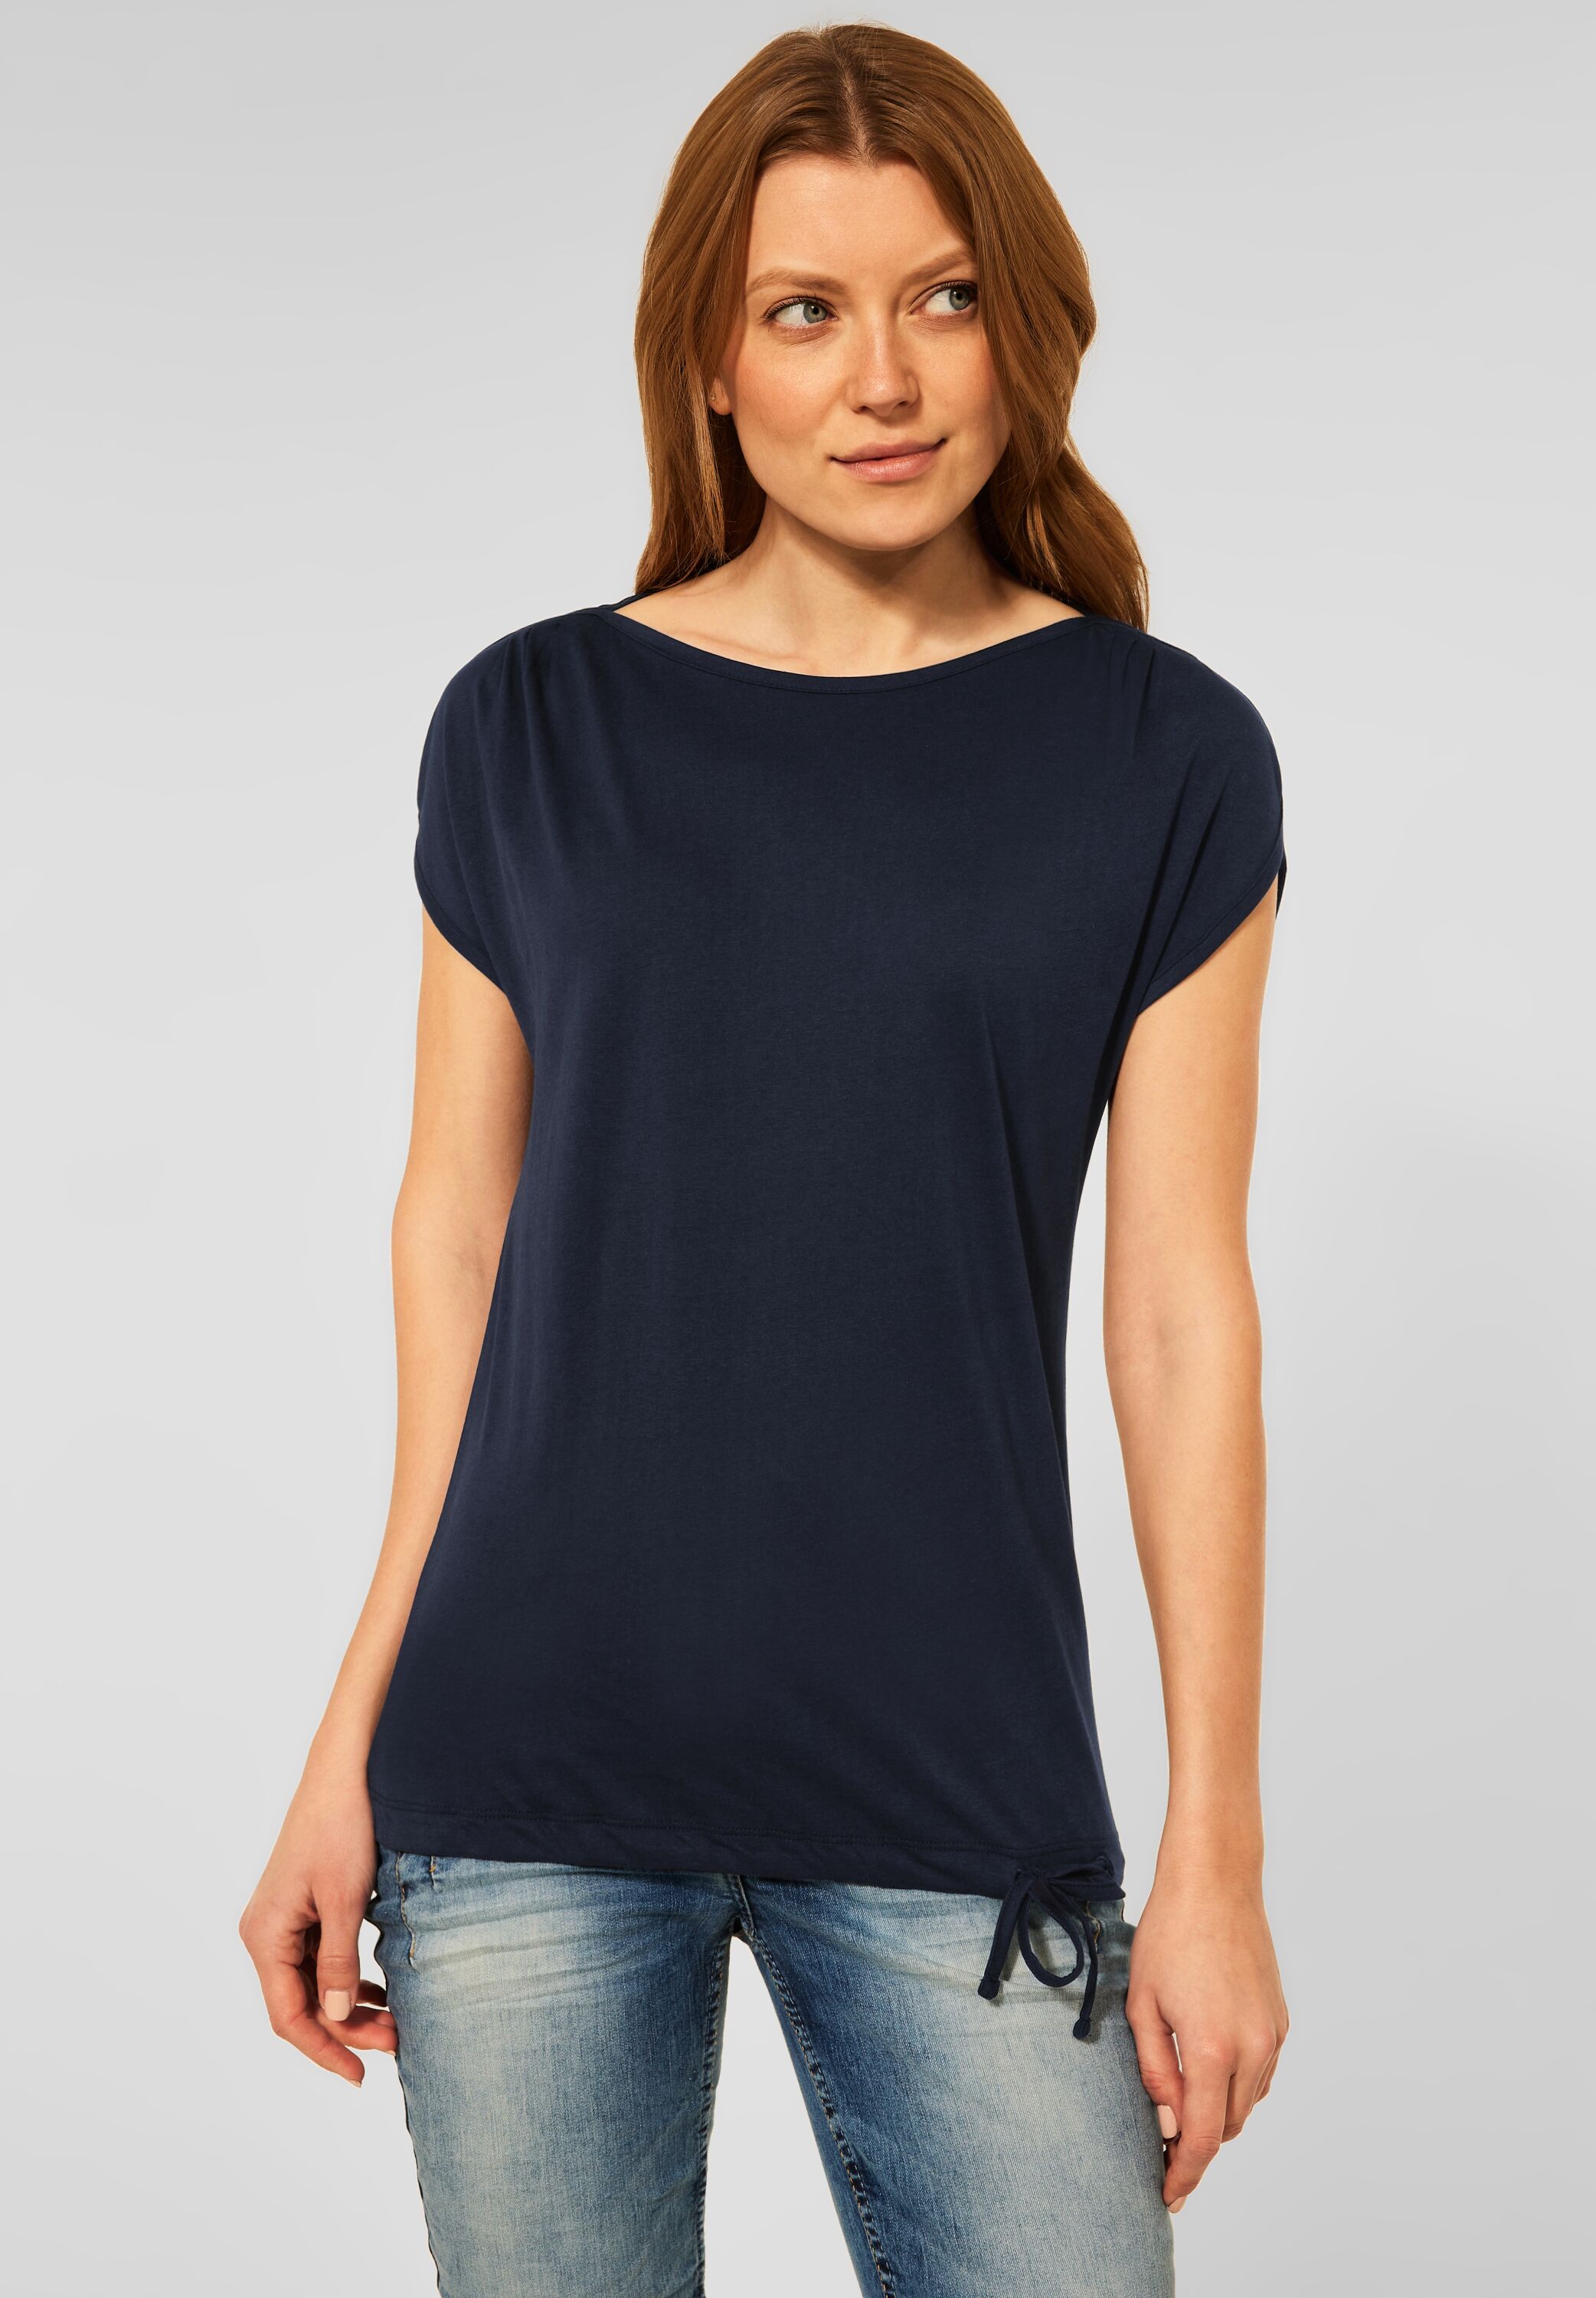 CECIL T-Shirt in Deep Blue im SALE reduziert B317833-10128 - CONCEPT Mode